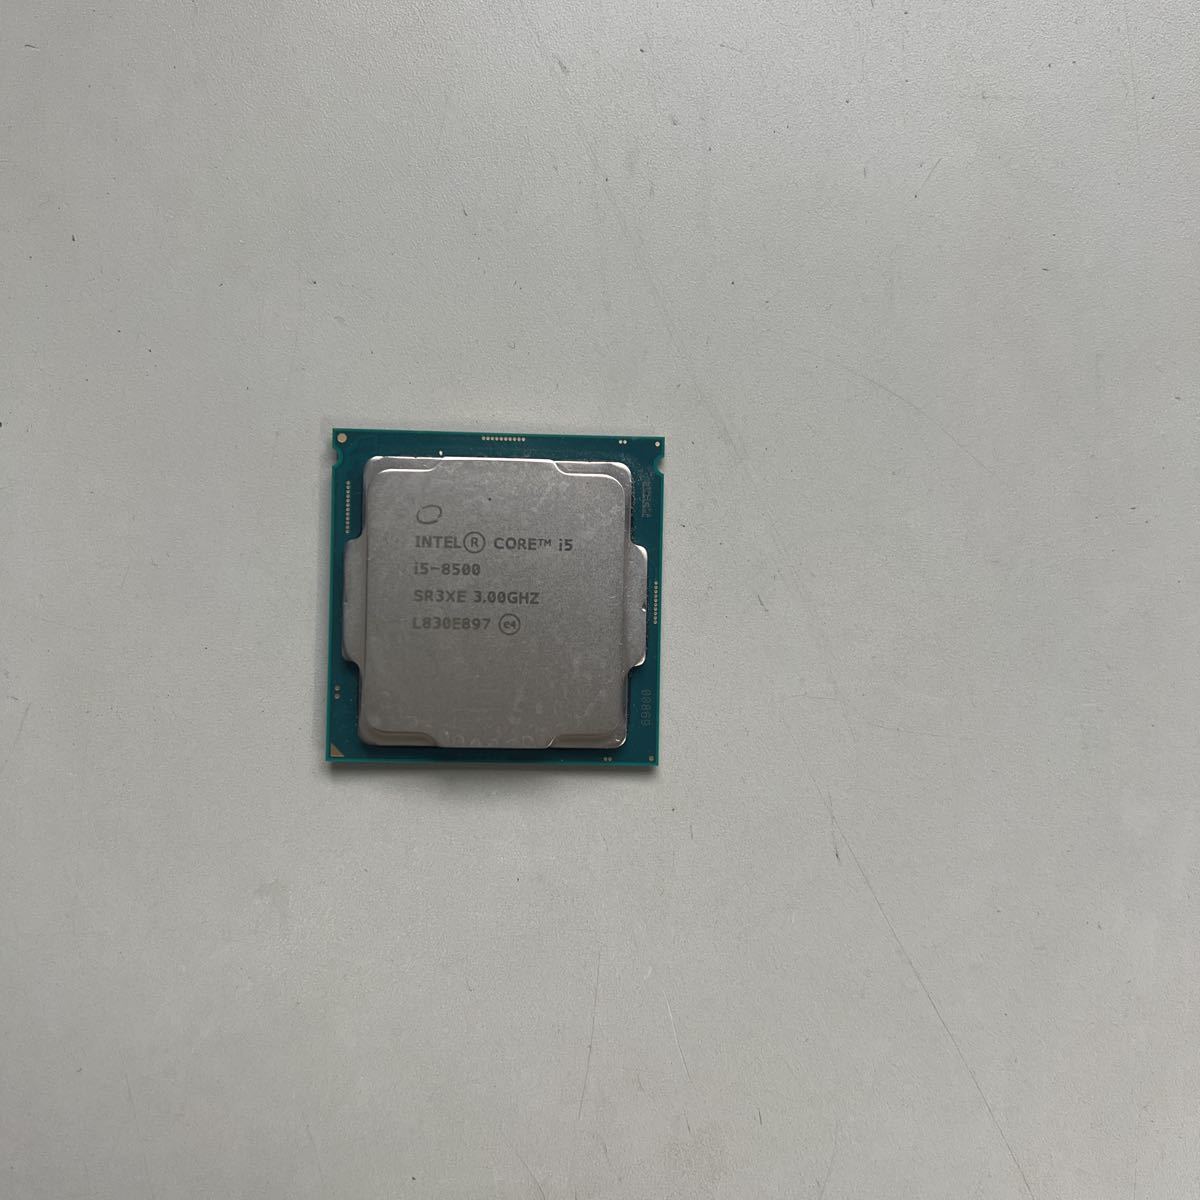 Intel Core i5-8500 SR3XE 3.00GHZ CPU 動作未確認